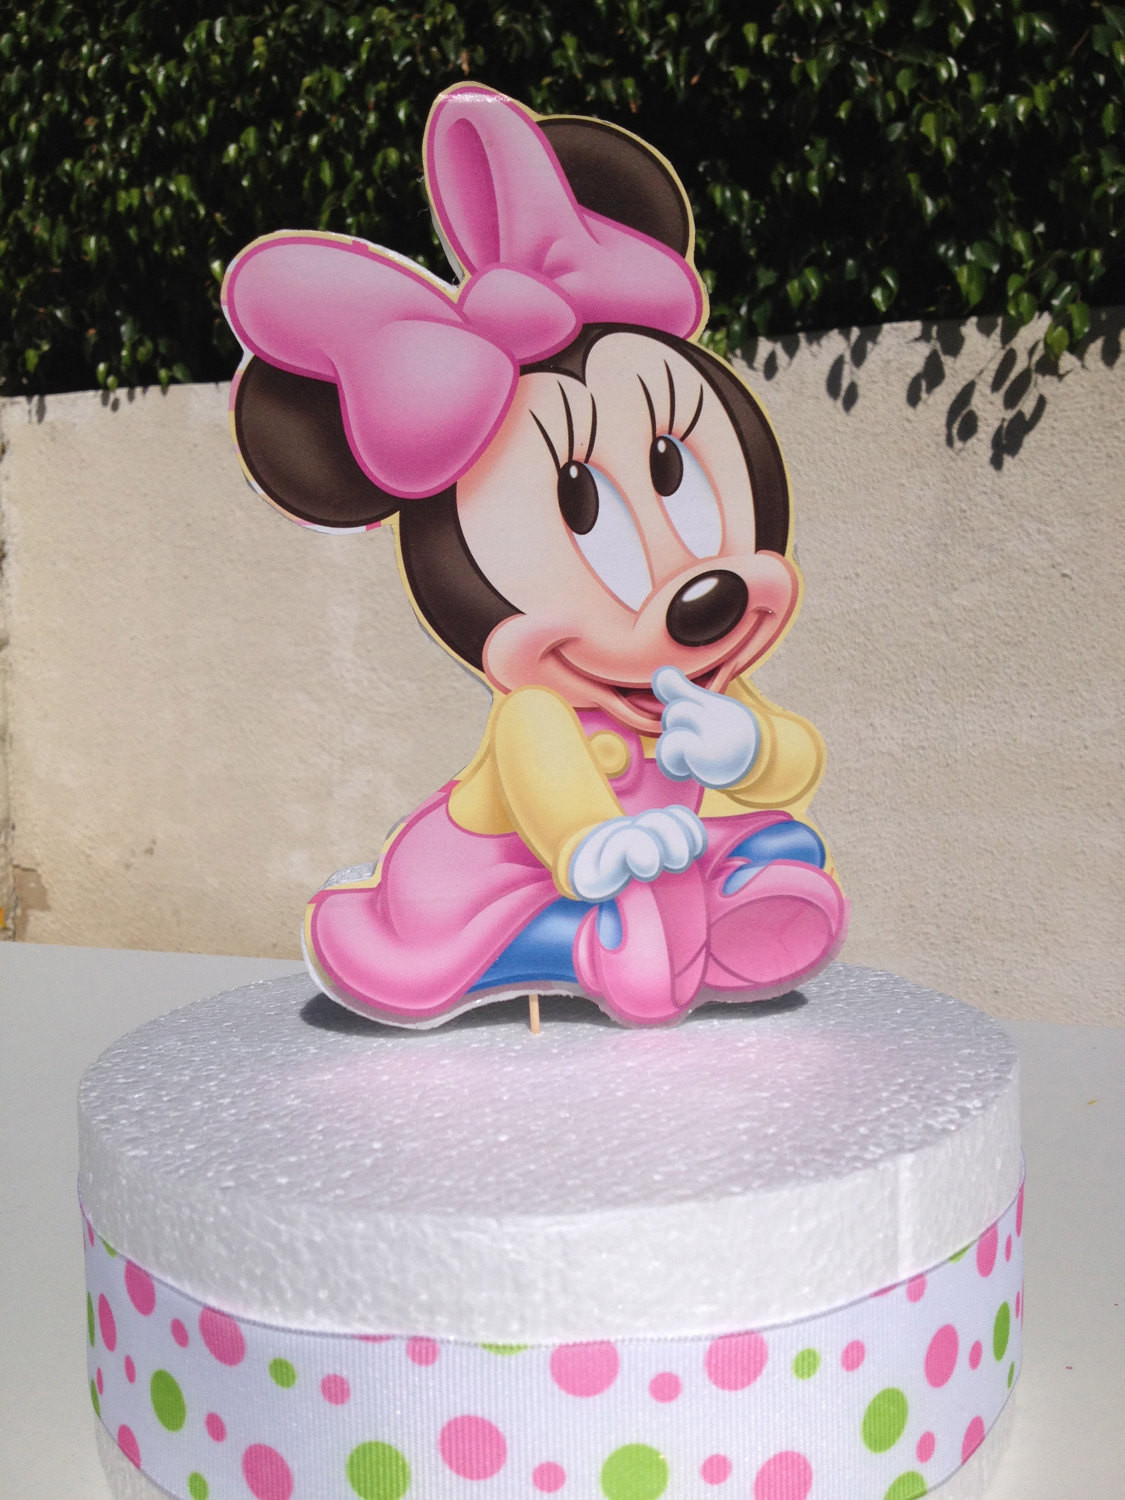 Minnie Mouse Birthday Cake Topper
 Baby Minnie Mouse Cake Topper for Baby Shower or 1st Birthday